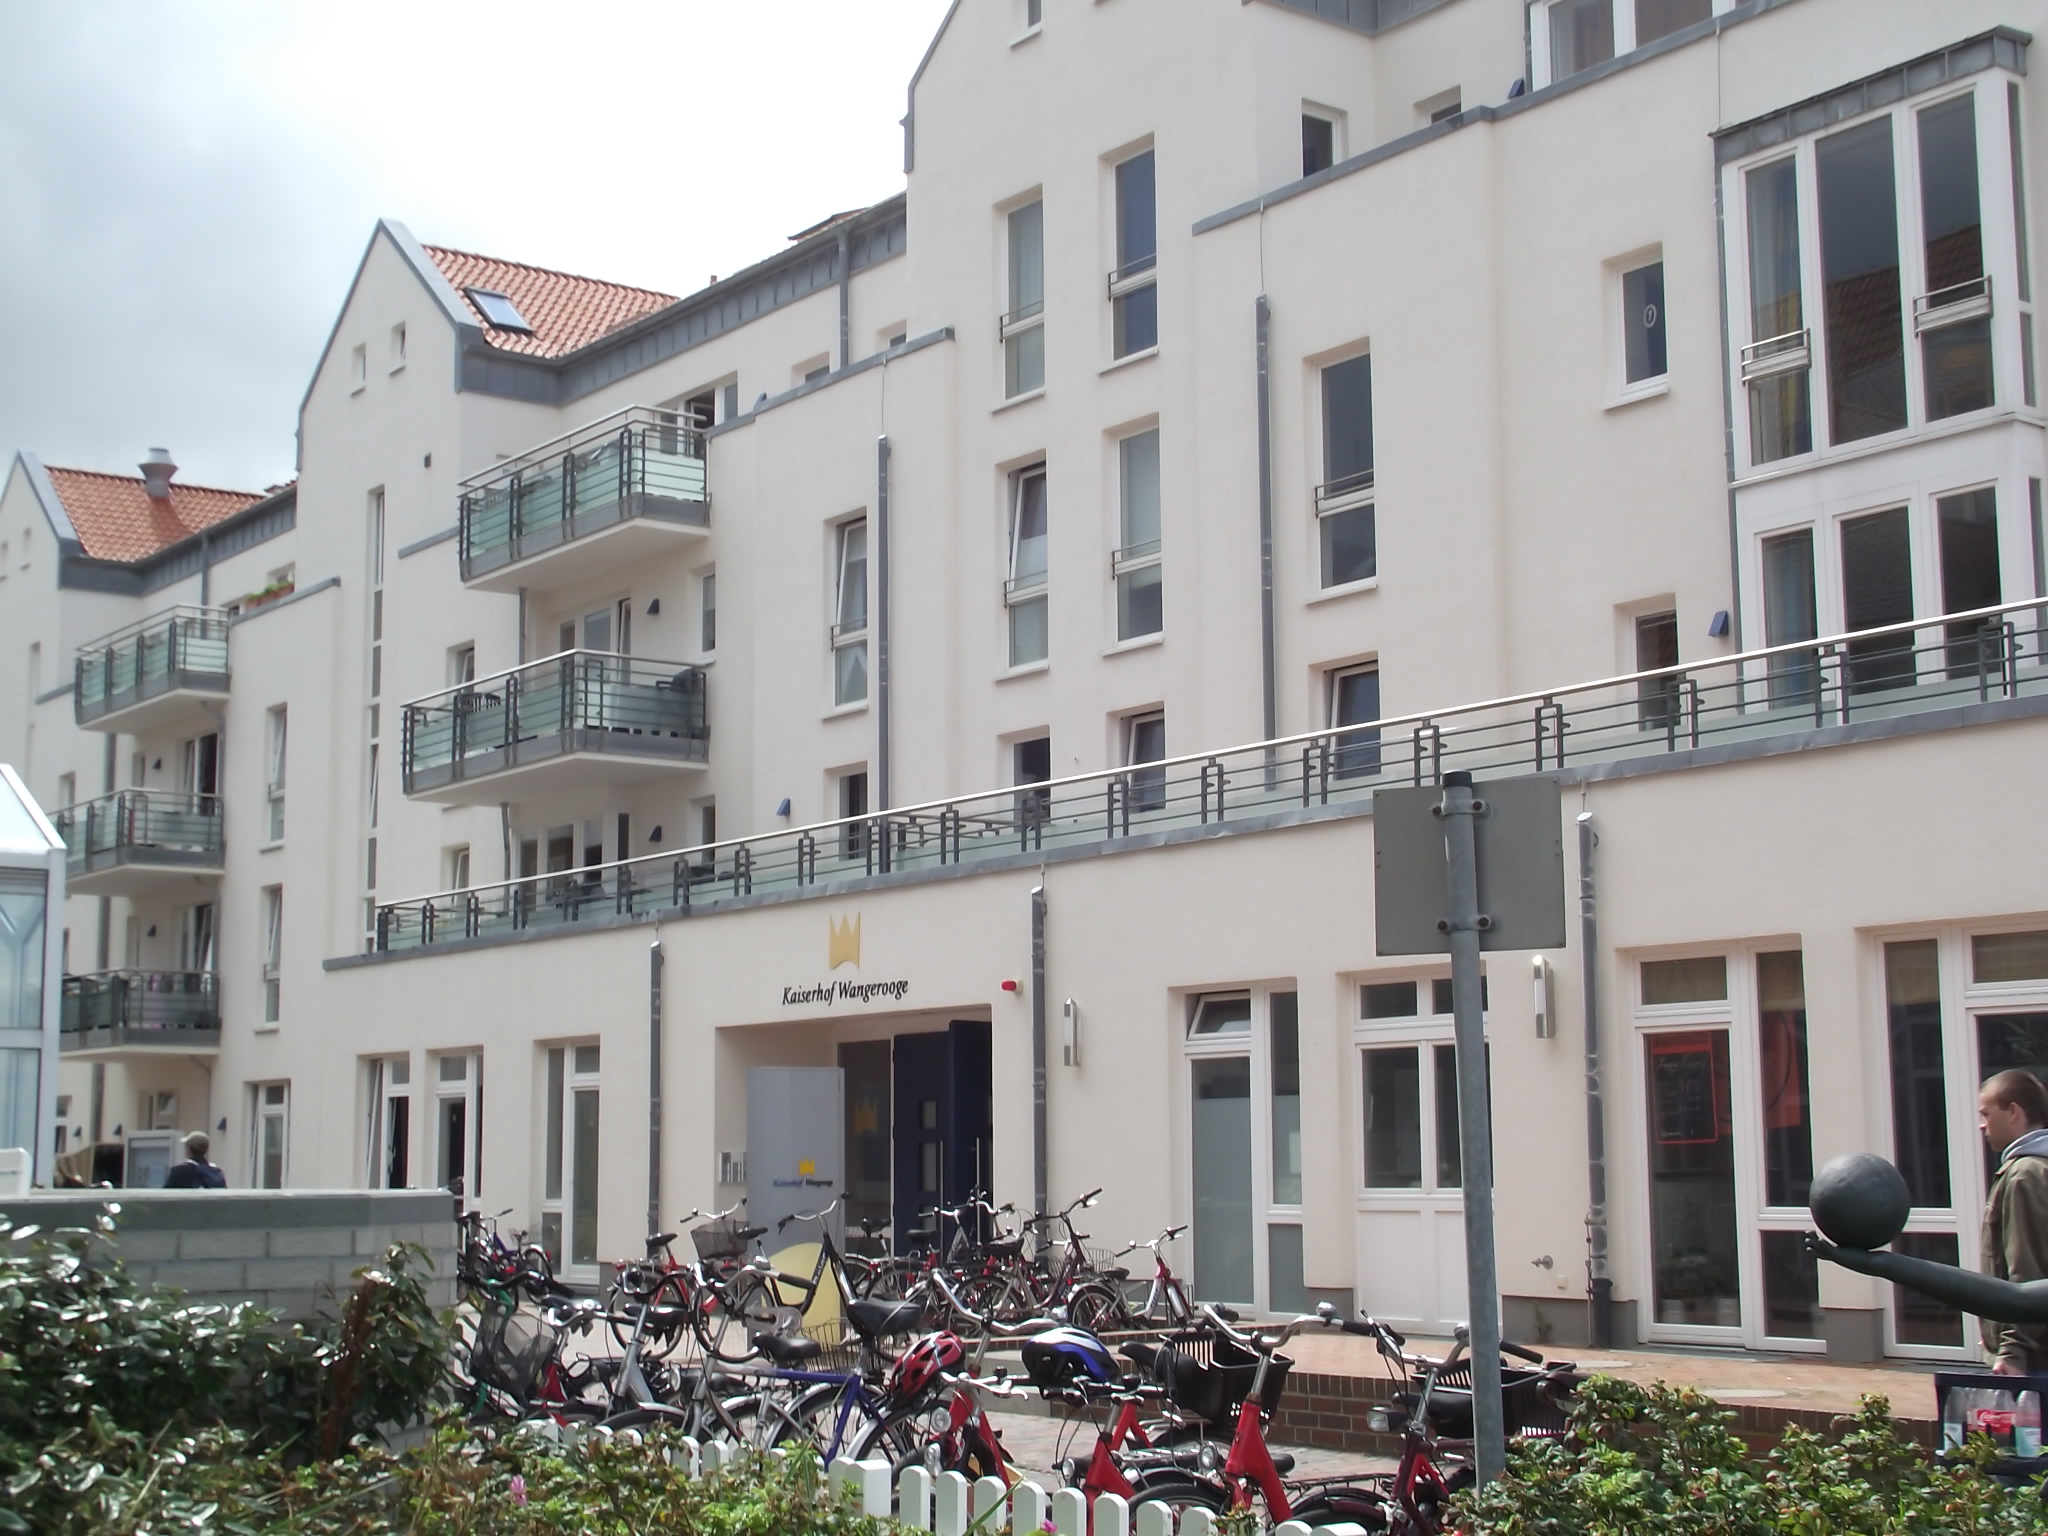 Kaiserhof Wangerooge - großes Hotel direkt am Strand